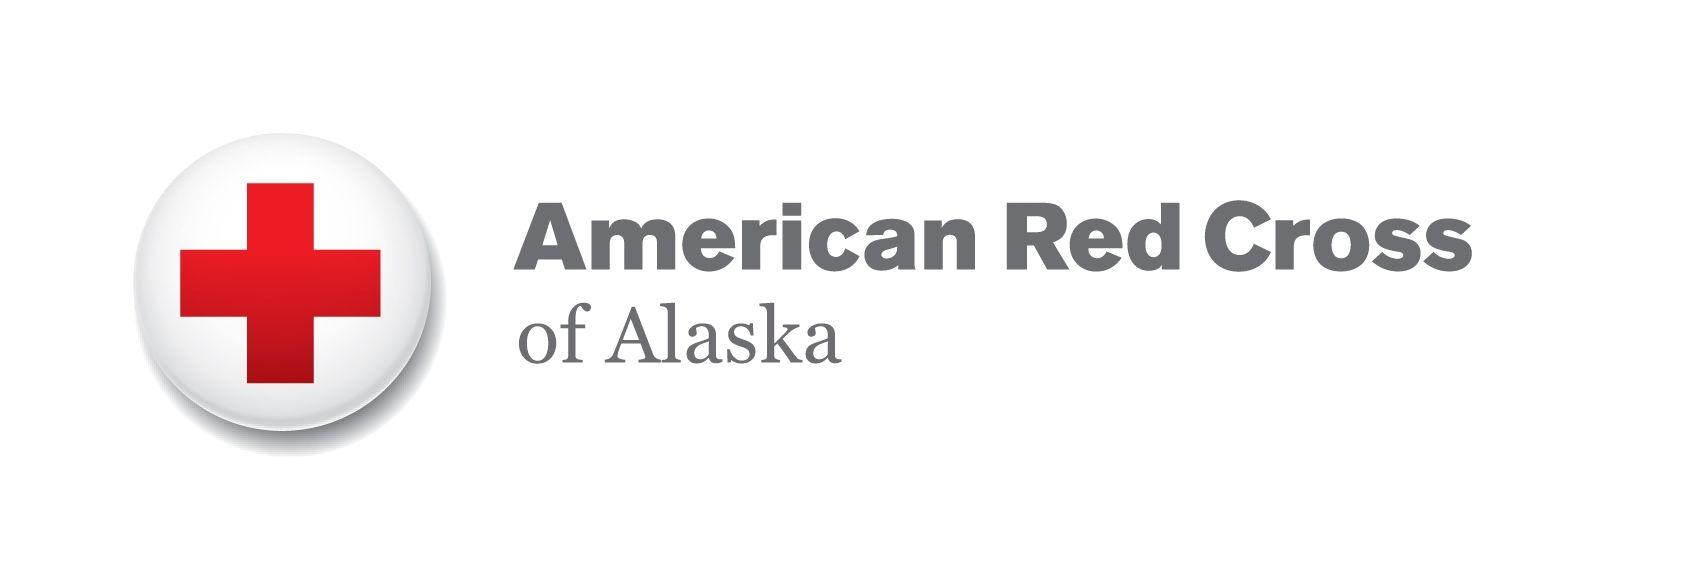 Army Red Cross Logo - Red Cross of Alaska